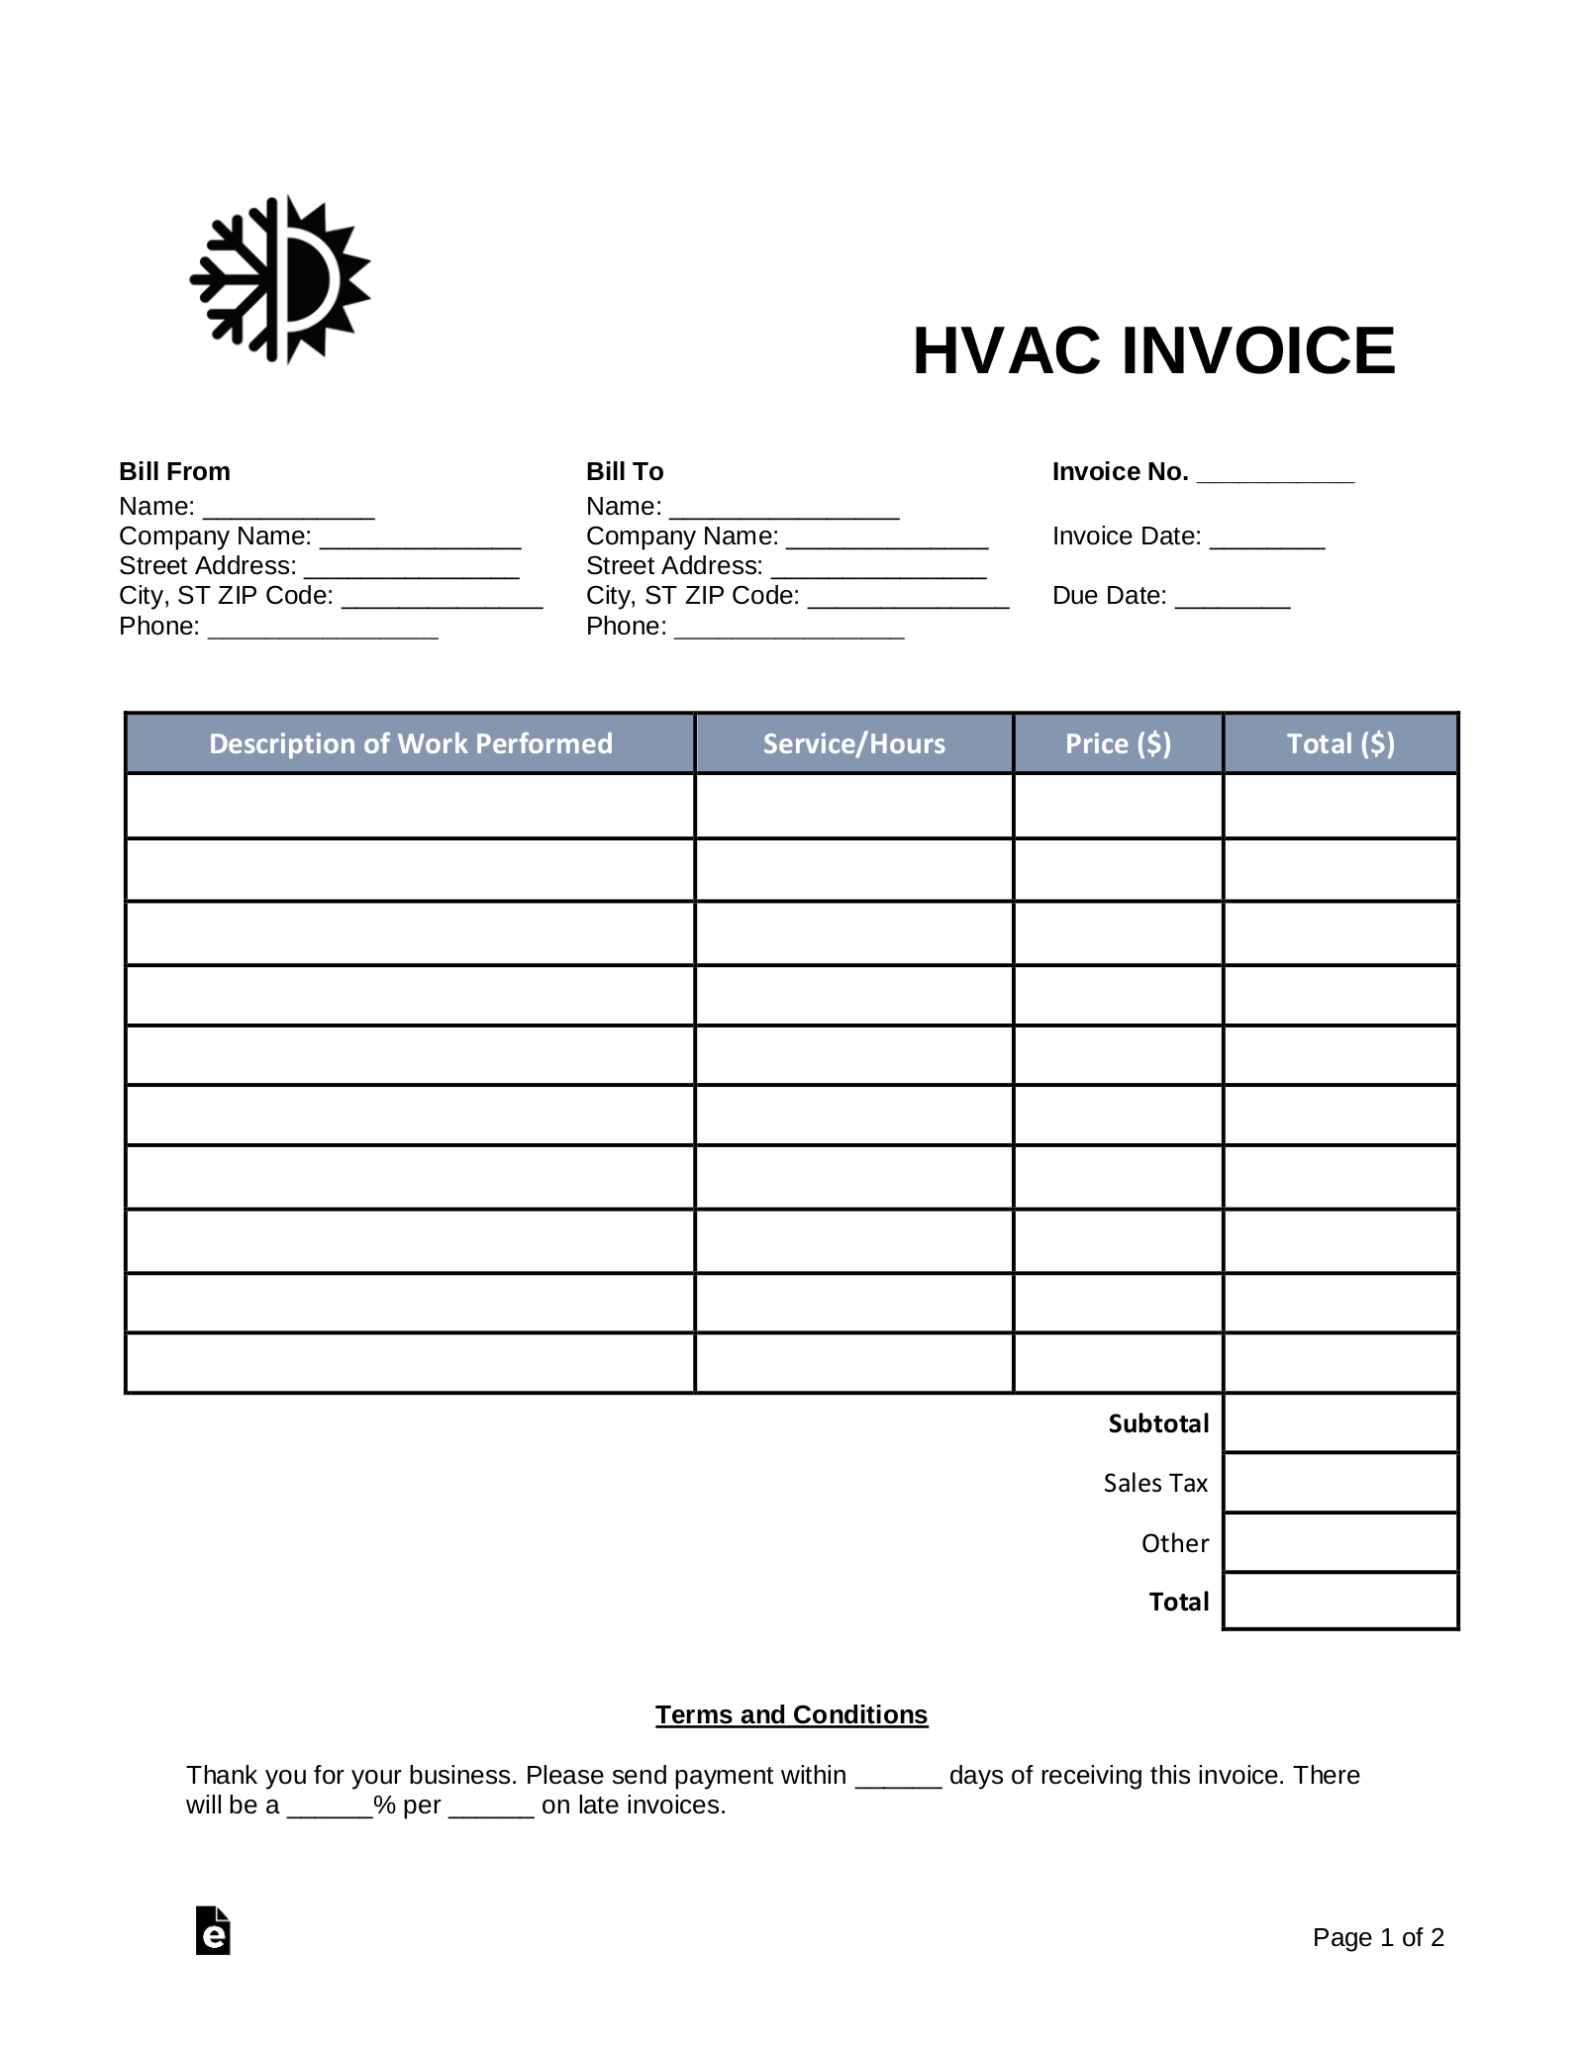 Free Hvac Invoice Template – Word | Pdf – Eforms With Regard To Generic Invoice Template Word